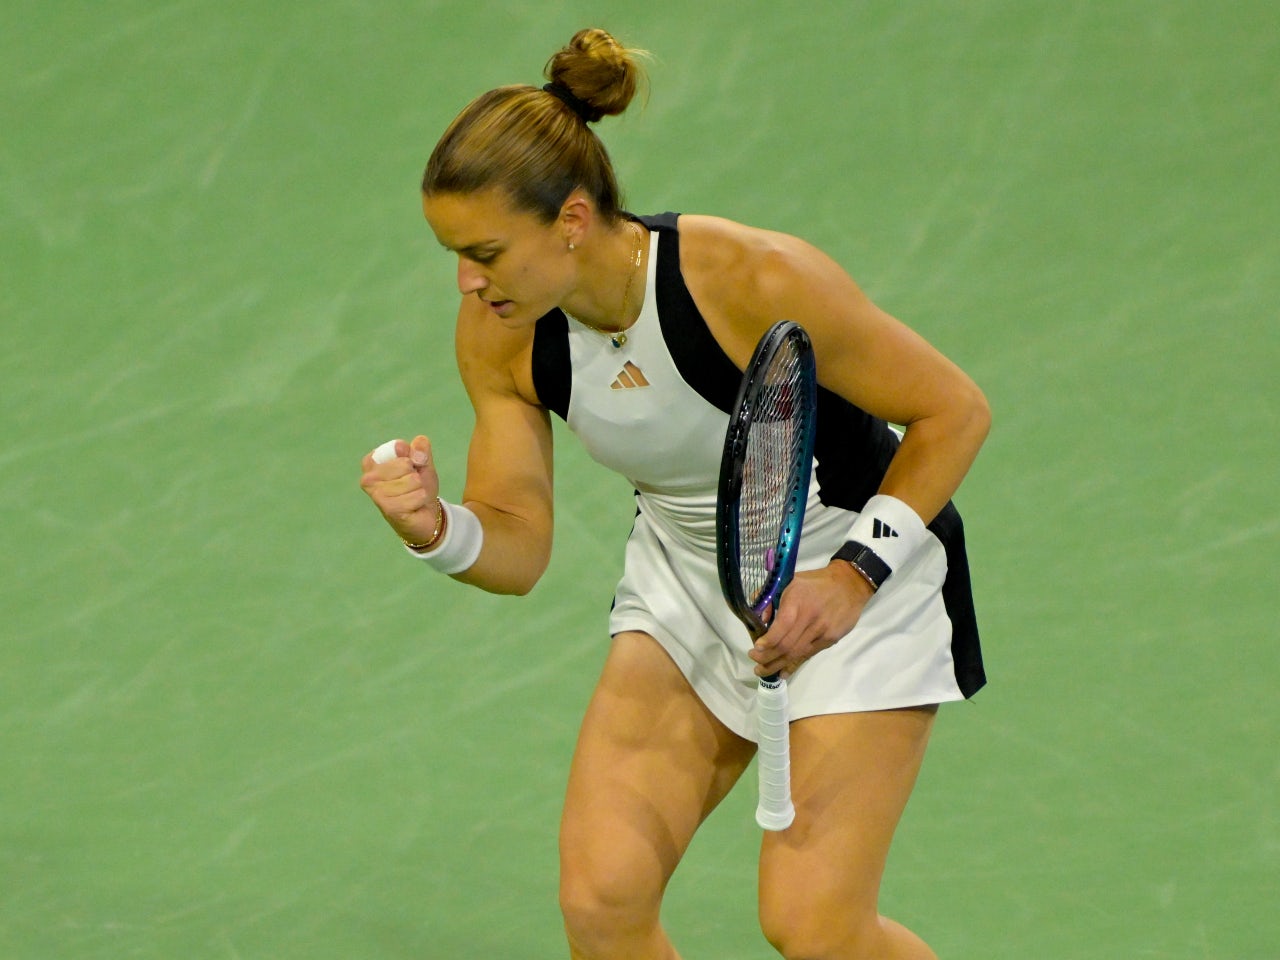 Preview: Maria Sakkari vs. Elena Rybakina - prediction, head-to-head, tournament so far